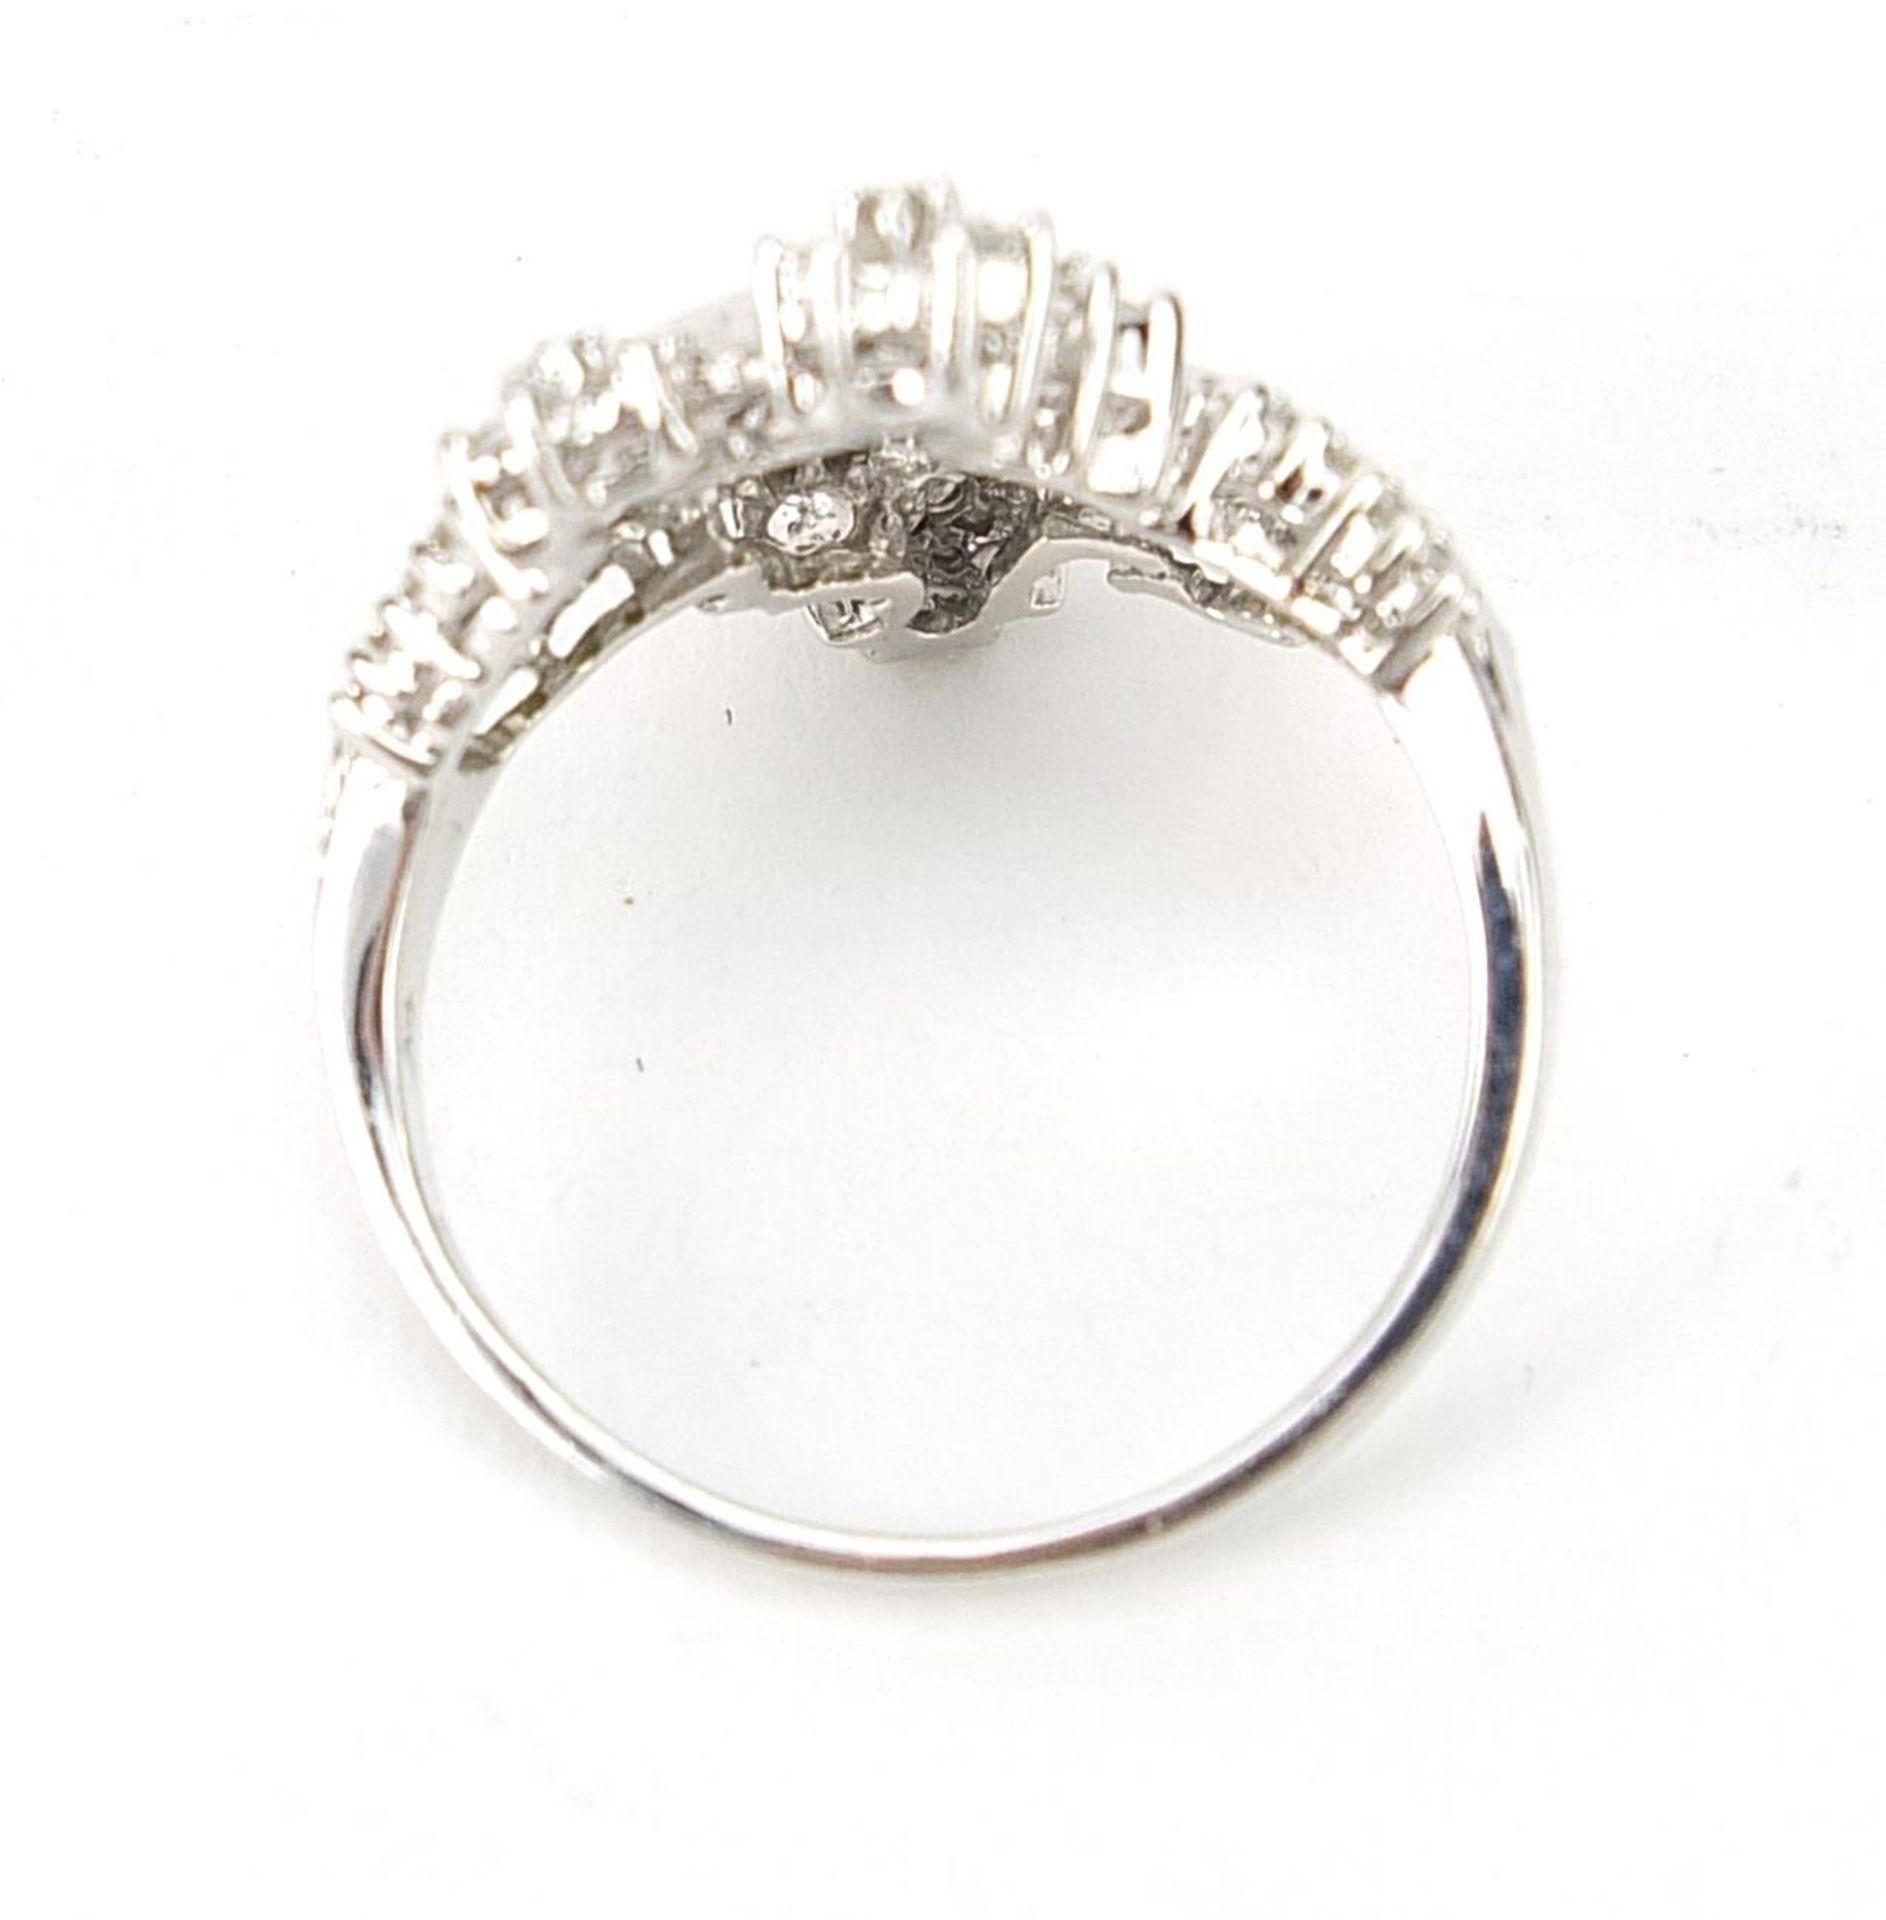 9ct white gold diamond shooting star design ring, size O, 5.0g - Image 4 of 4